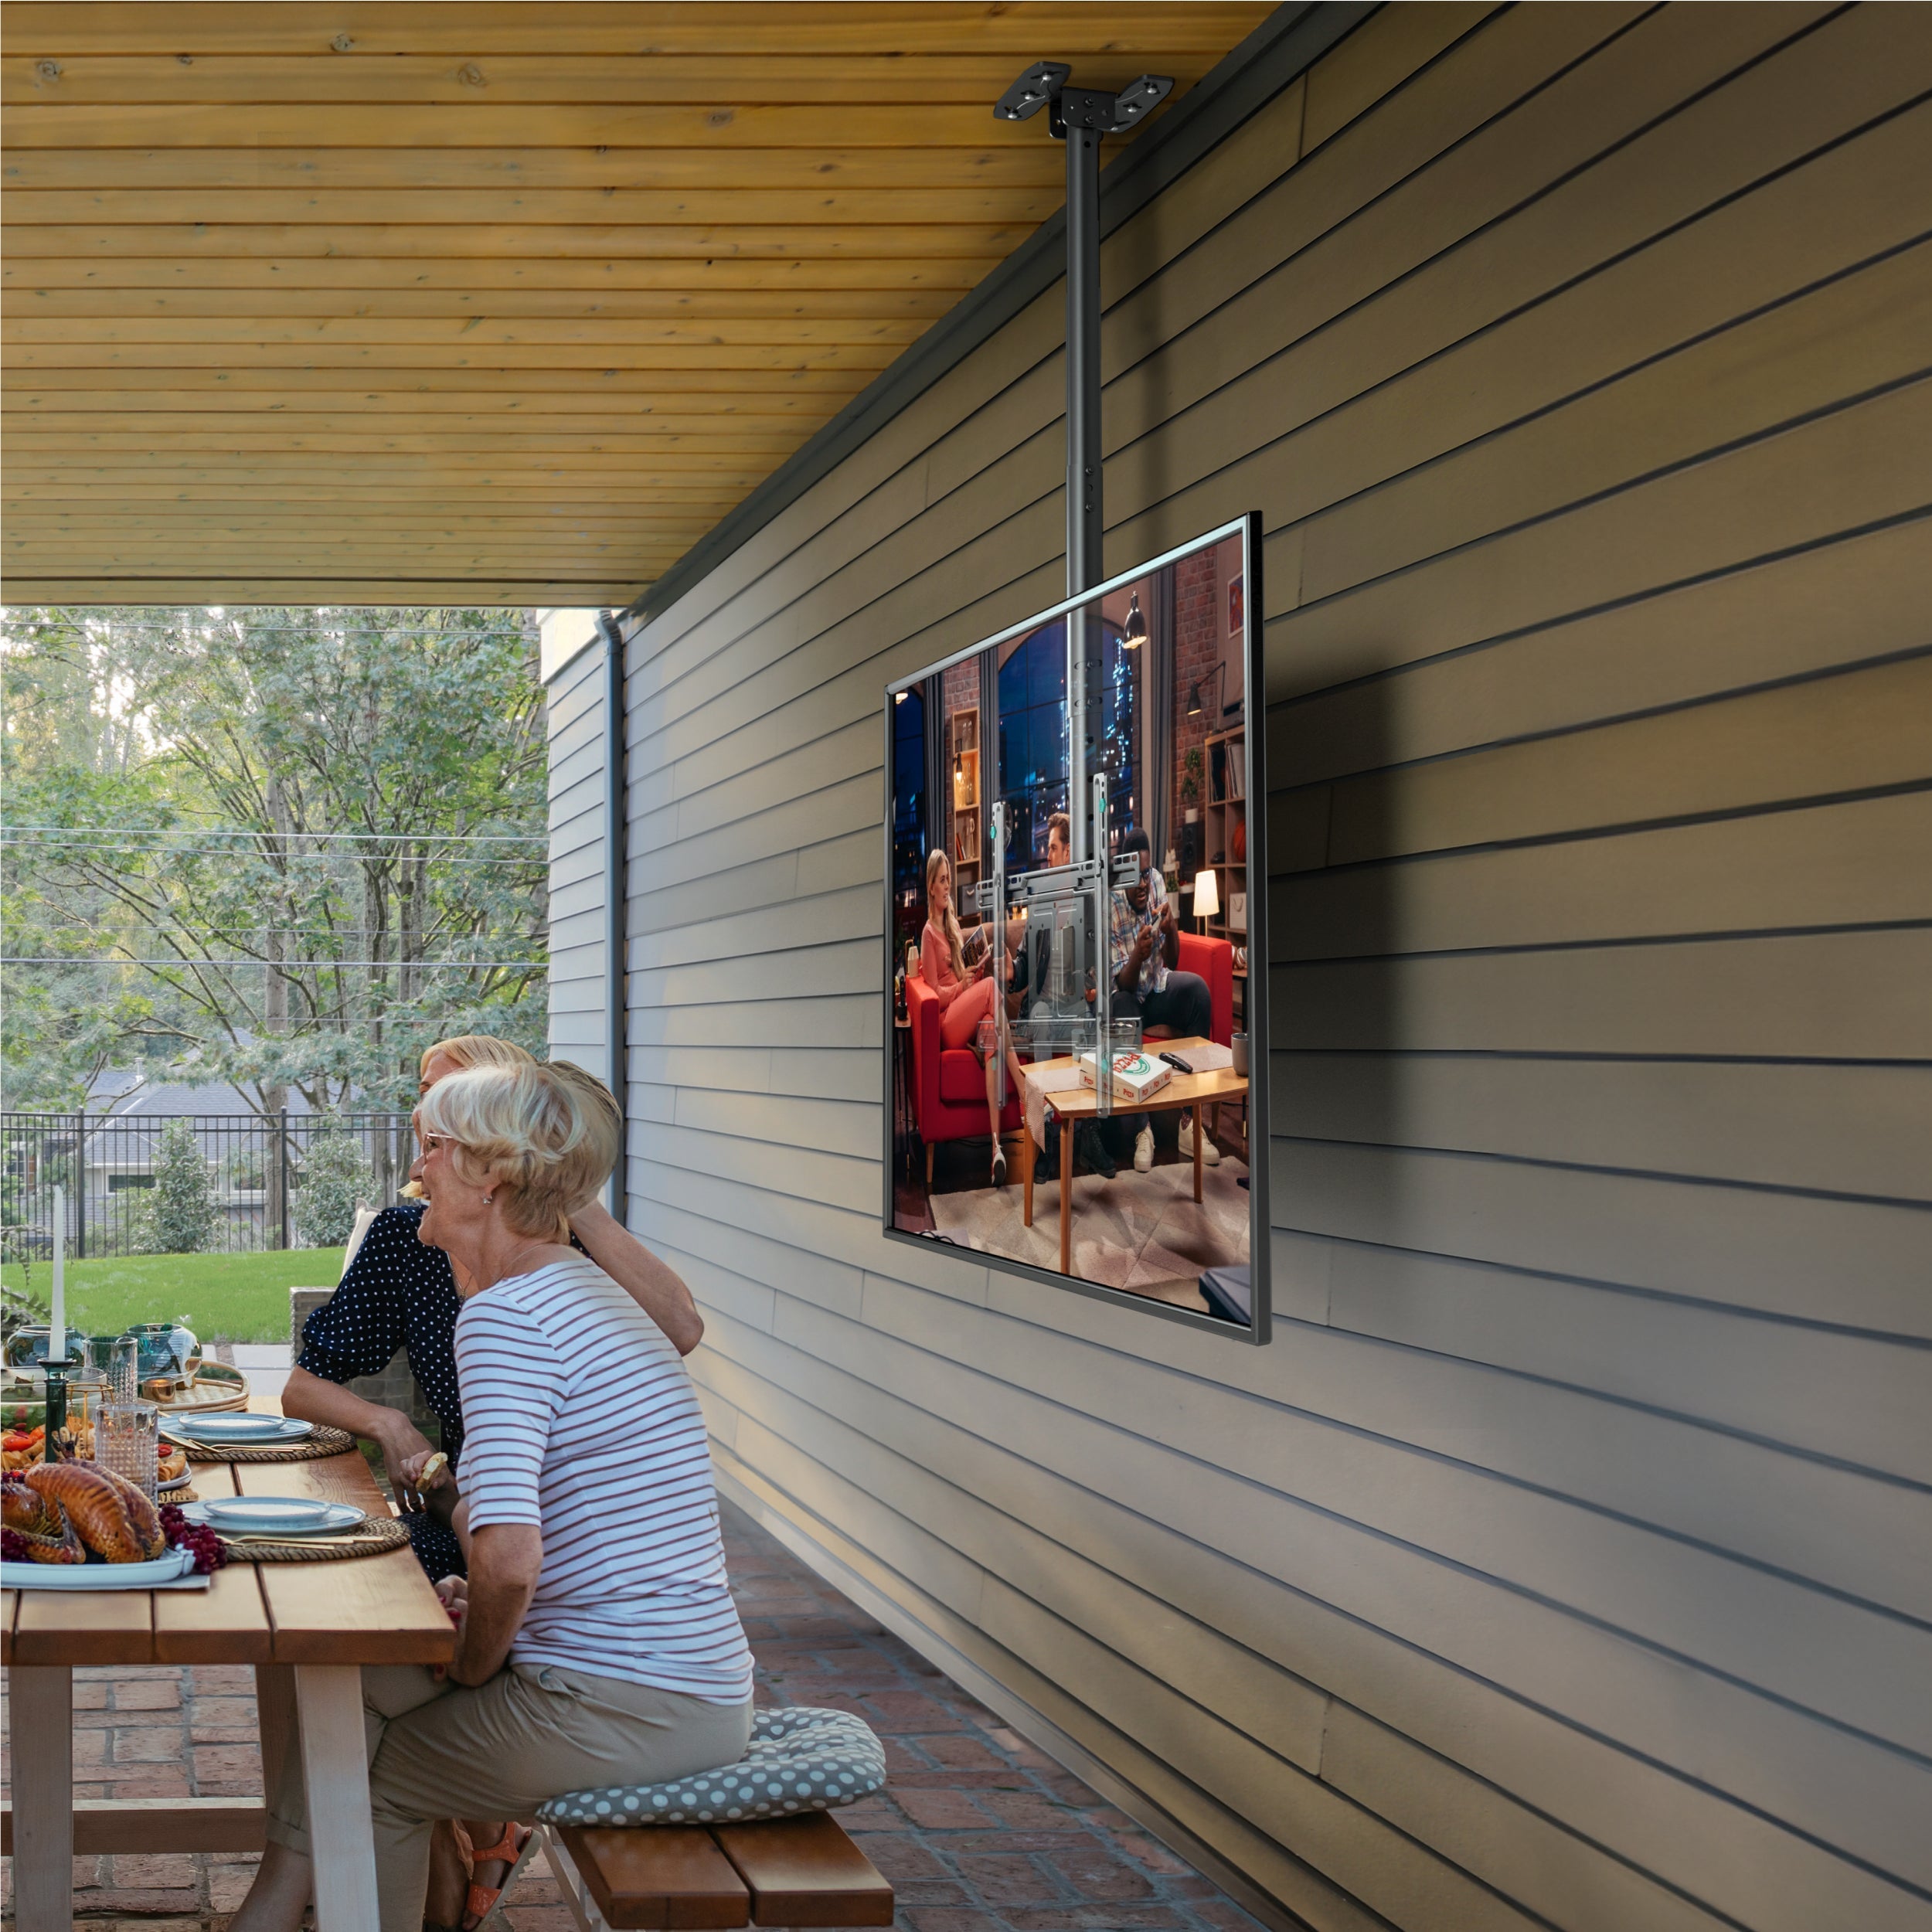 Ceiling TV Mount Tilt Swivel for 32" to 80-inch Screens up to 150 lb ONKRON N1L, Black